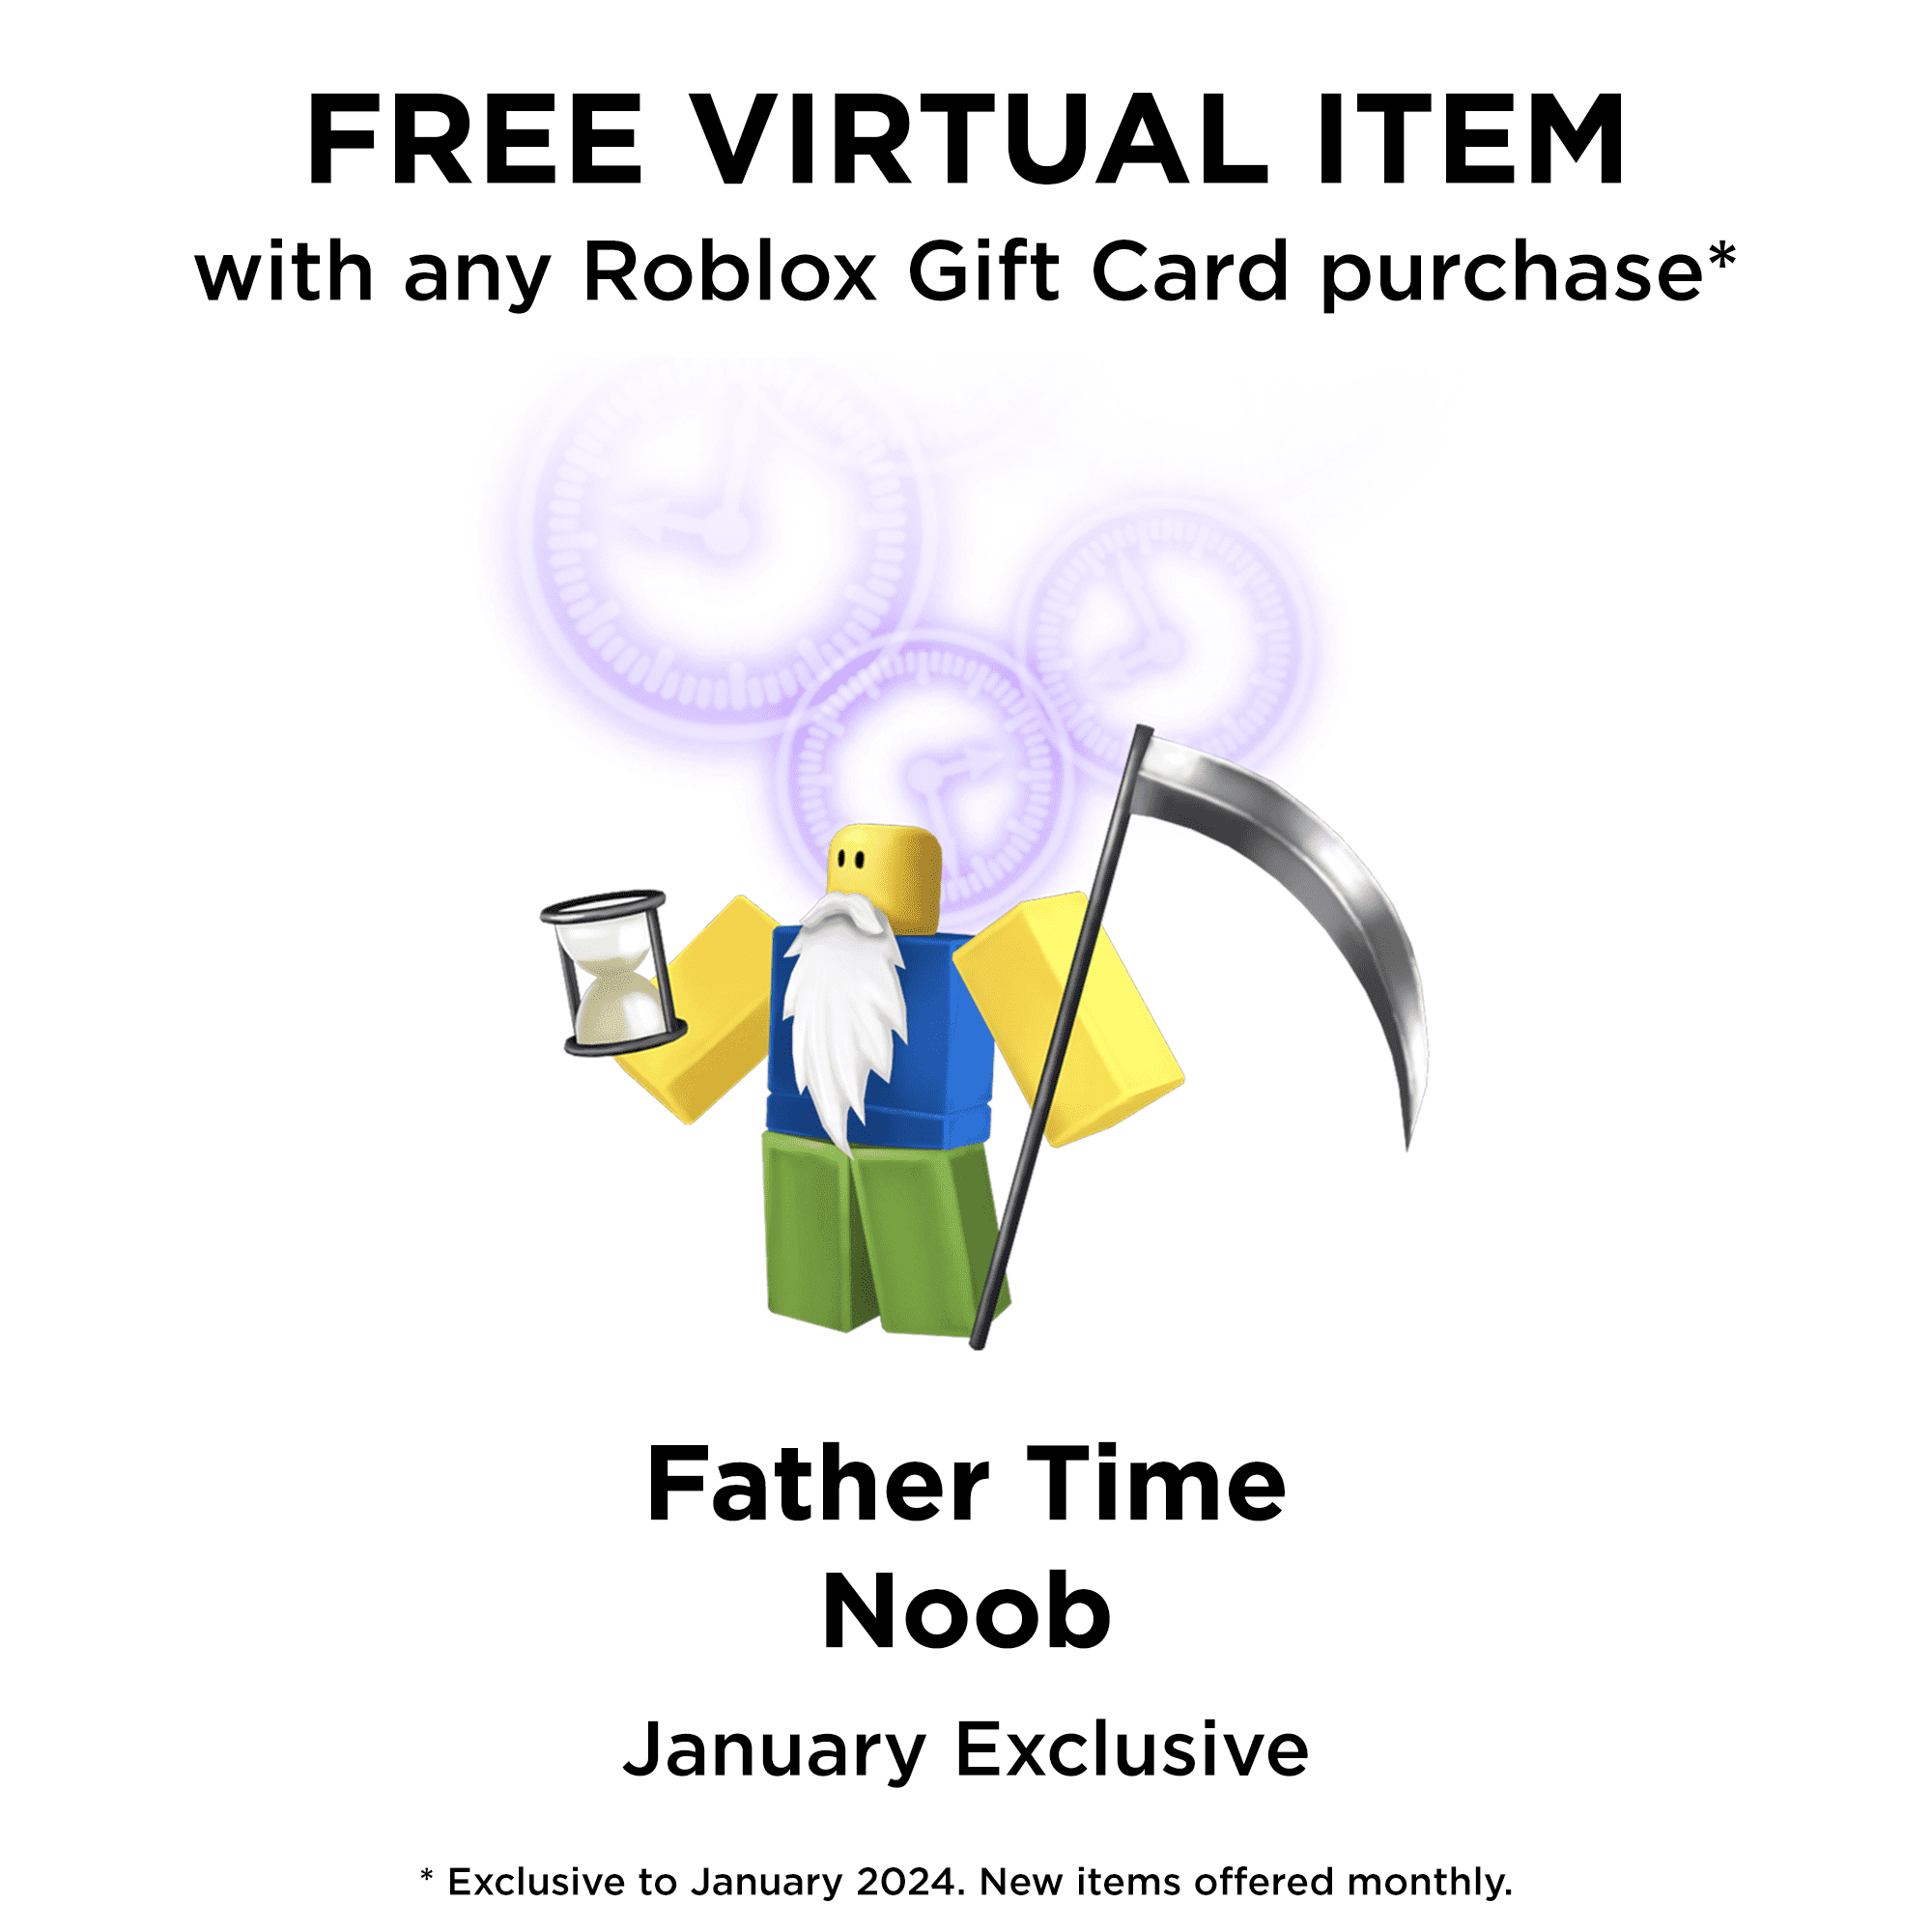 Roblox $20 Gift Card - [Digital] + Exclusive Virtual Item 